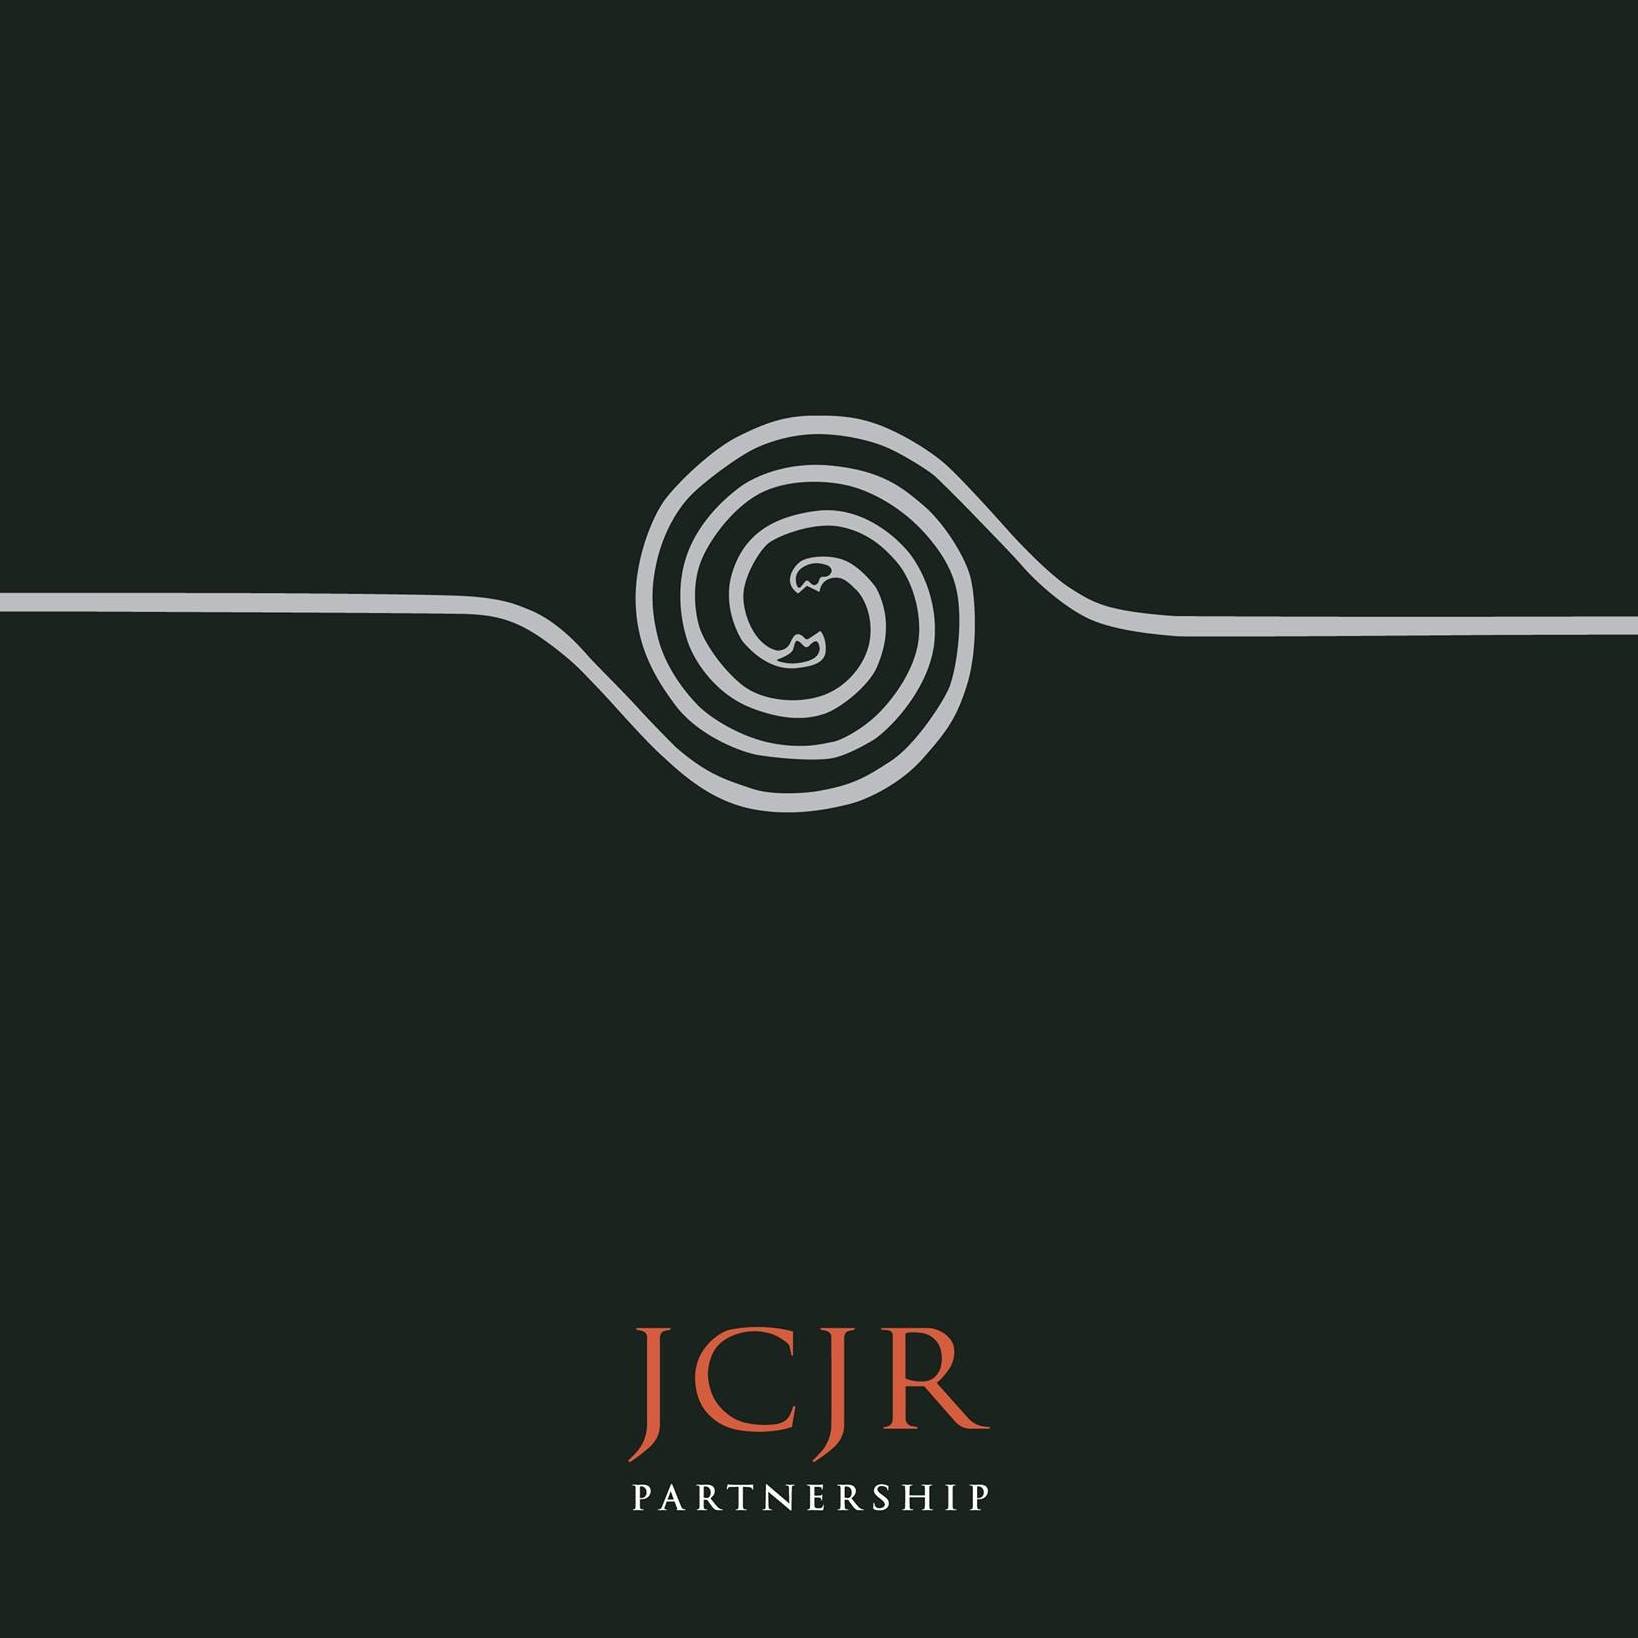 JCJR Partnership - Logo